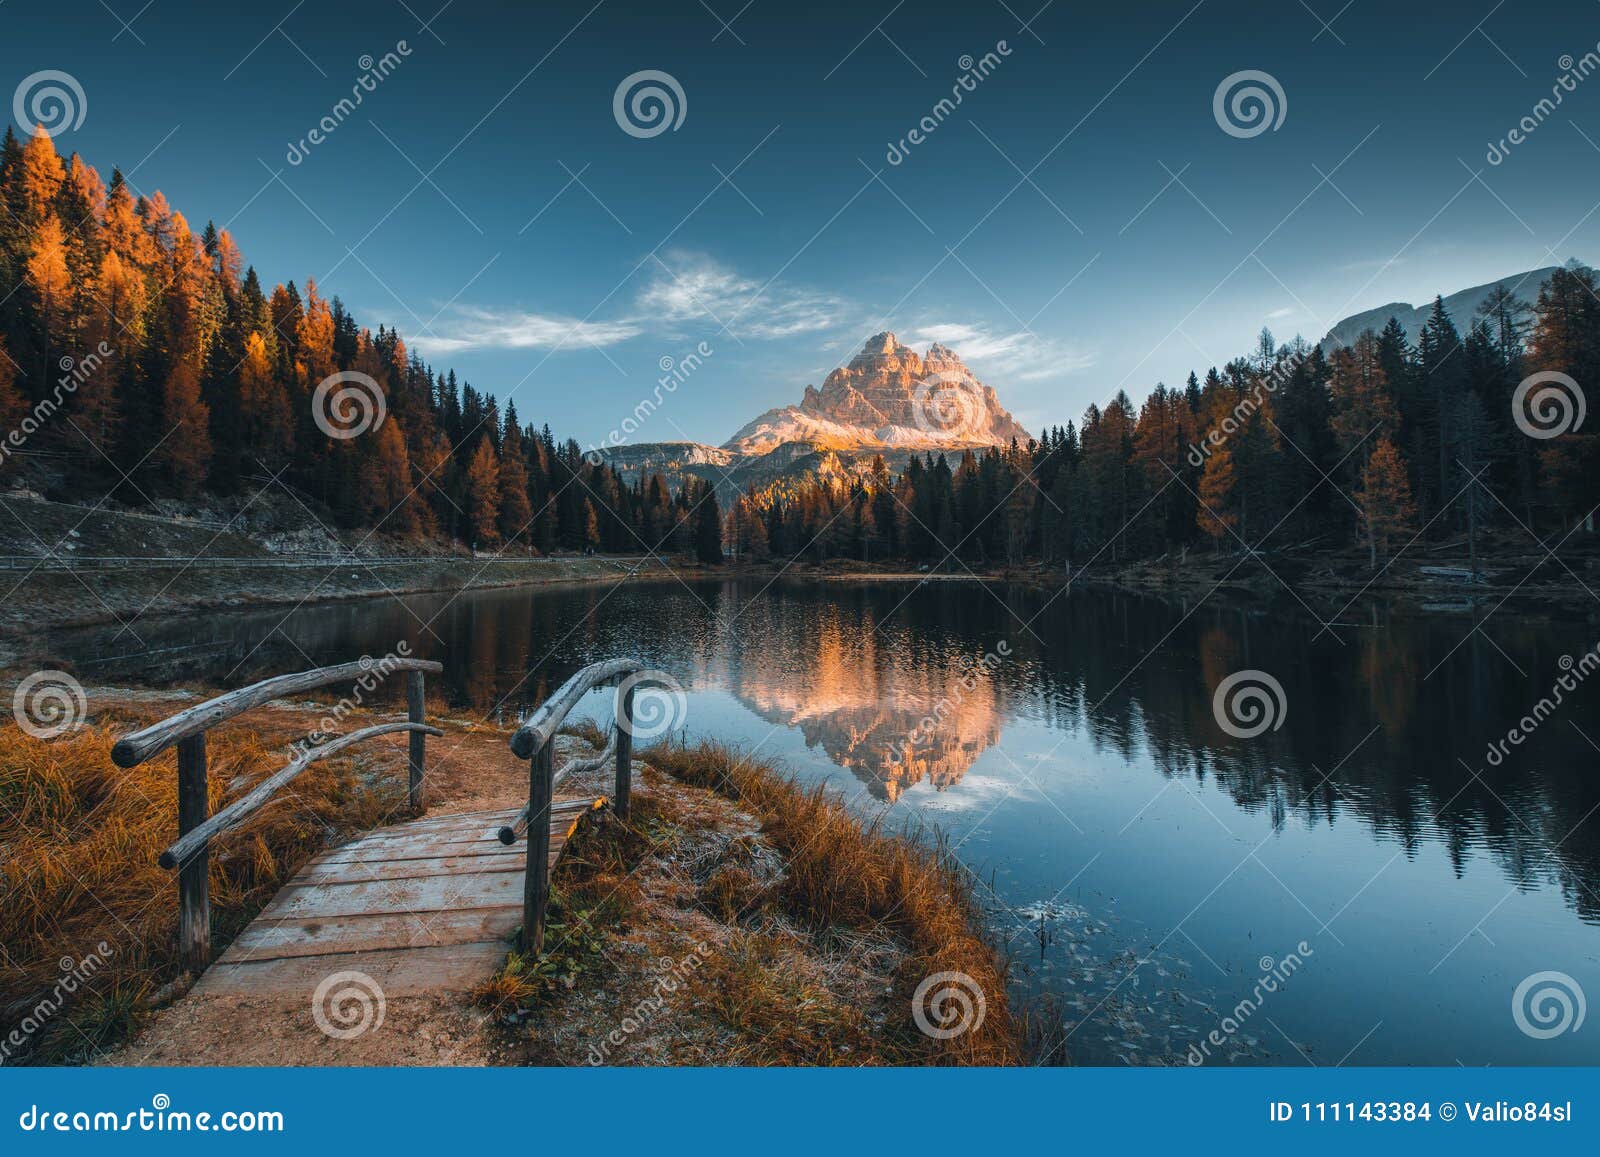 morning view of lago antorno, dolomites, lake mountain landscape